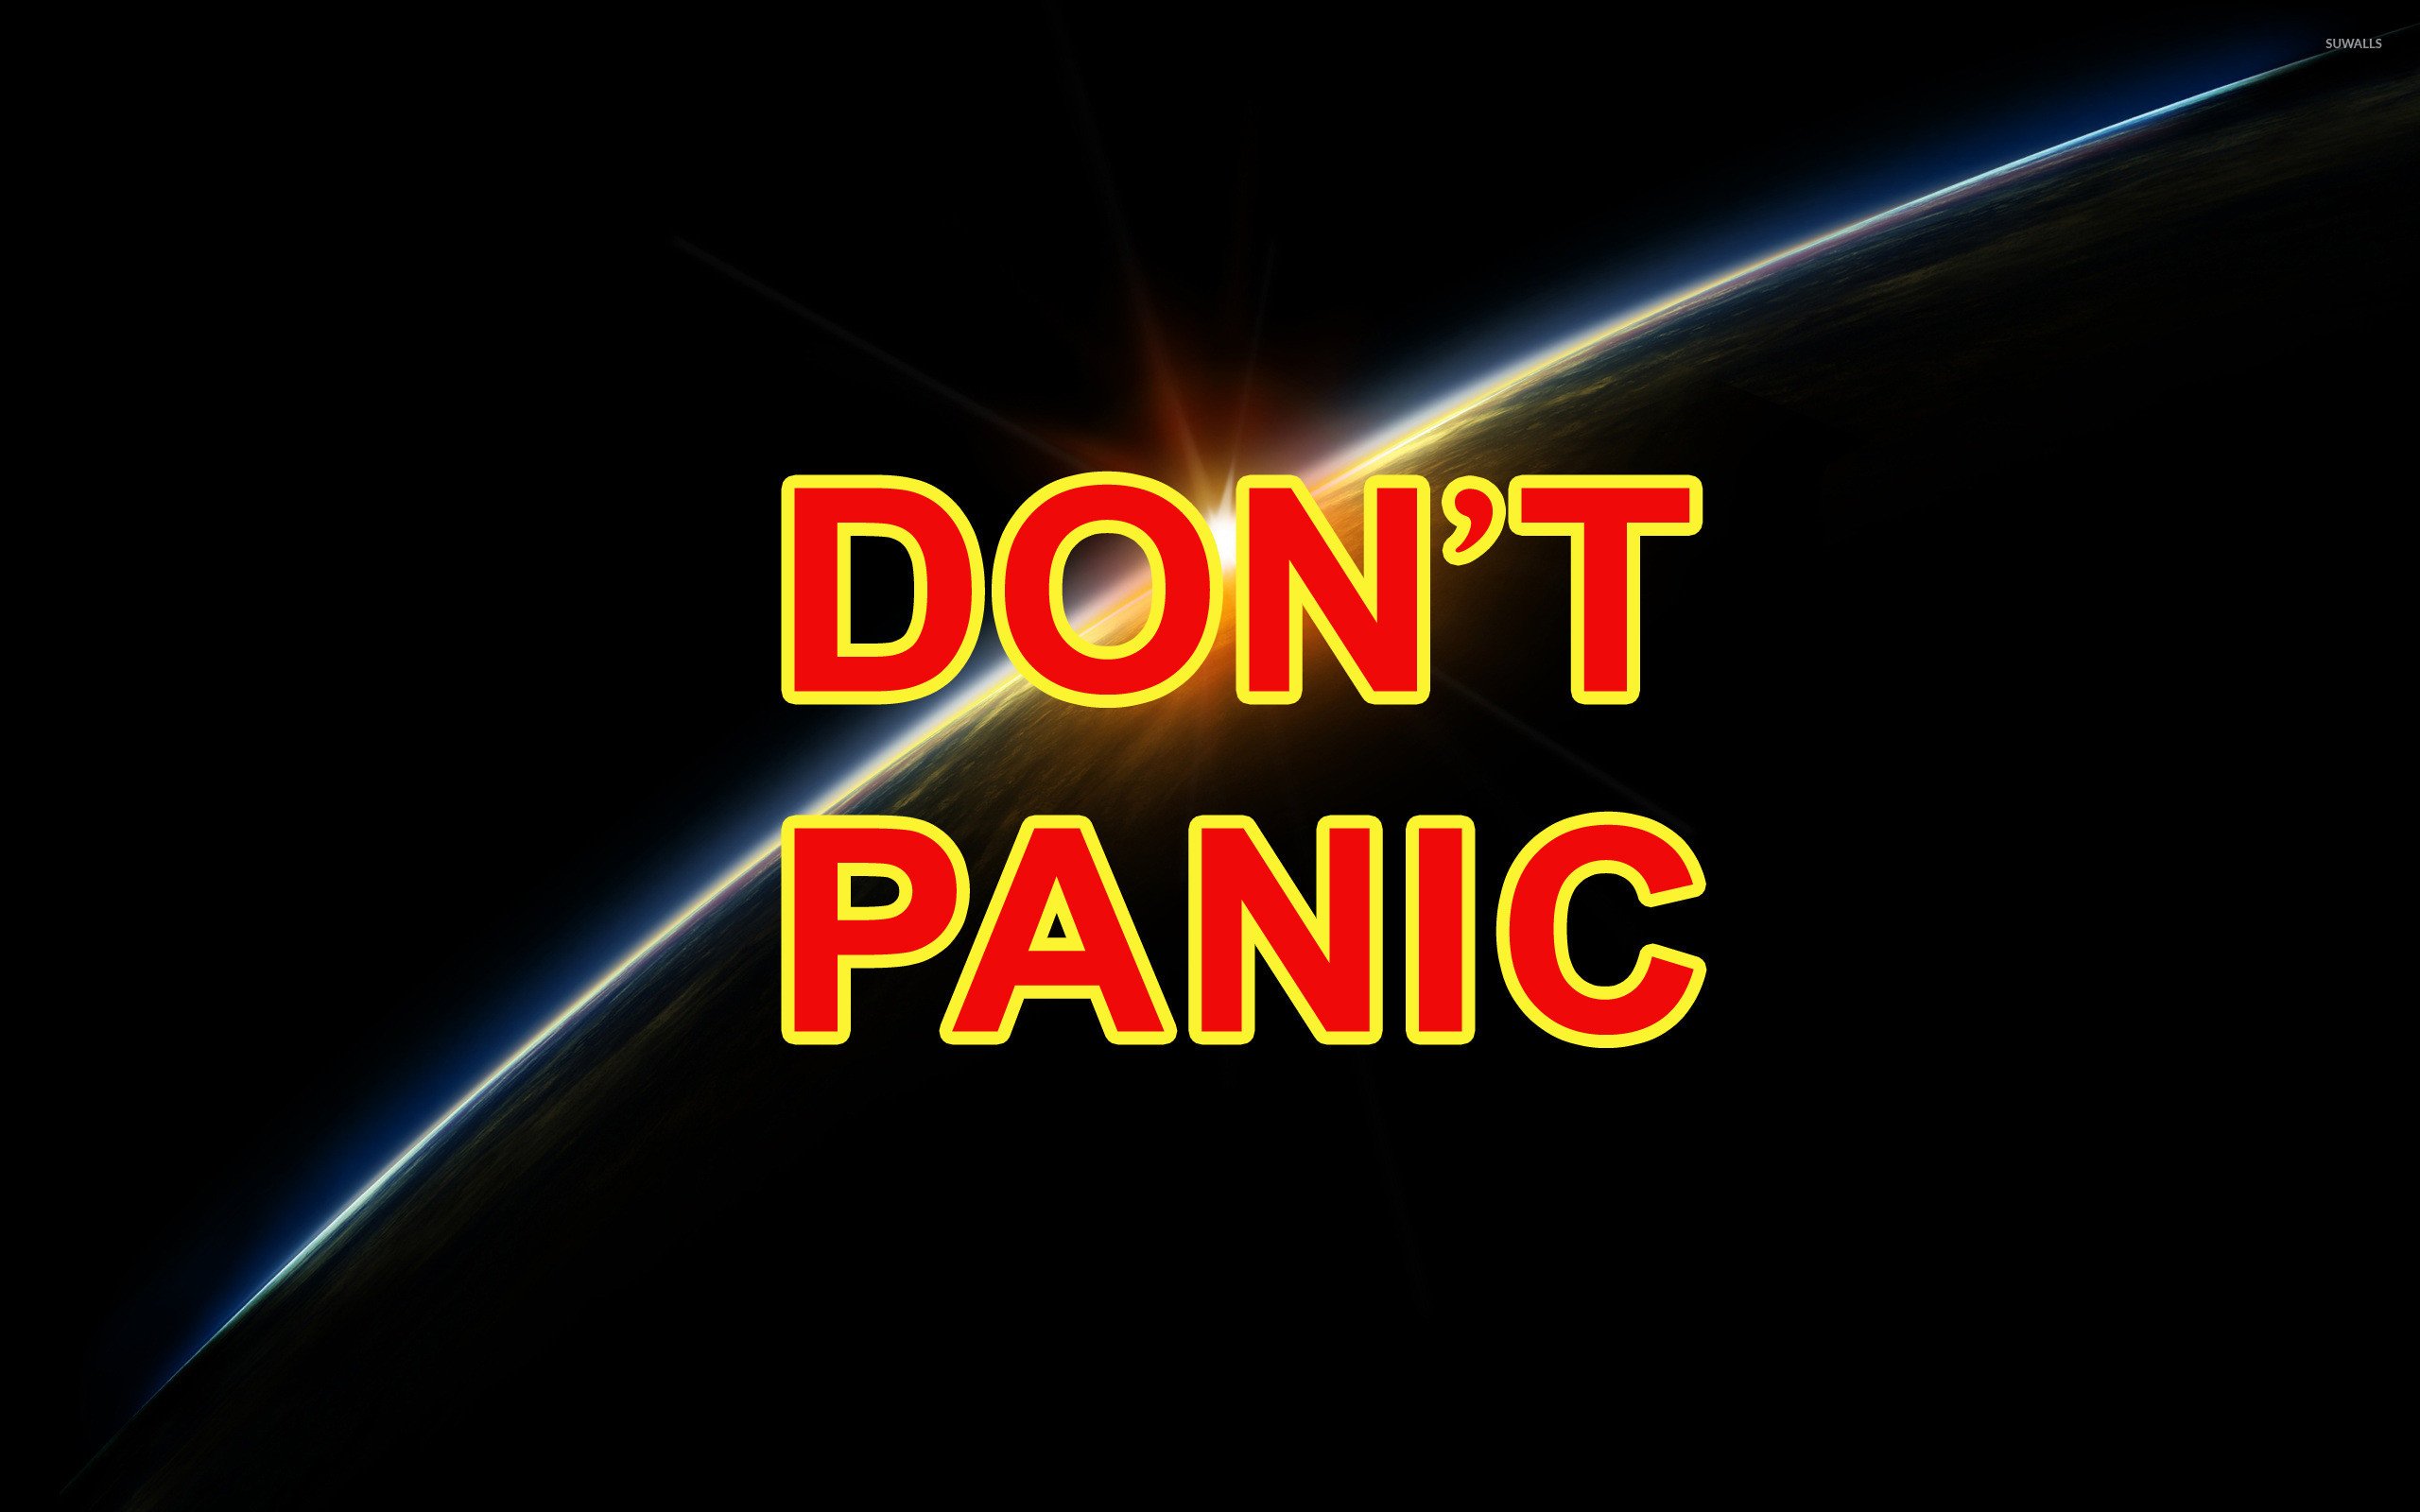 Don t object. Don't Panic автостопом по галактике. Don't Panic надпись. Донт паник автостопом по галактике. Без паники автостопом по галактике.